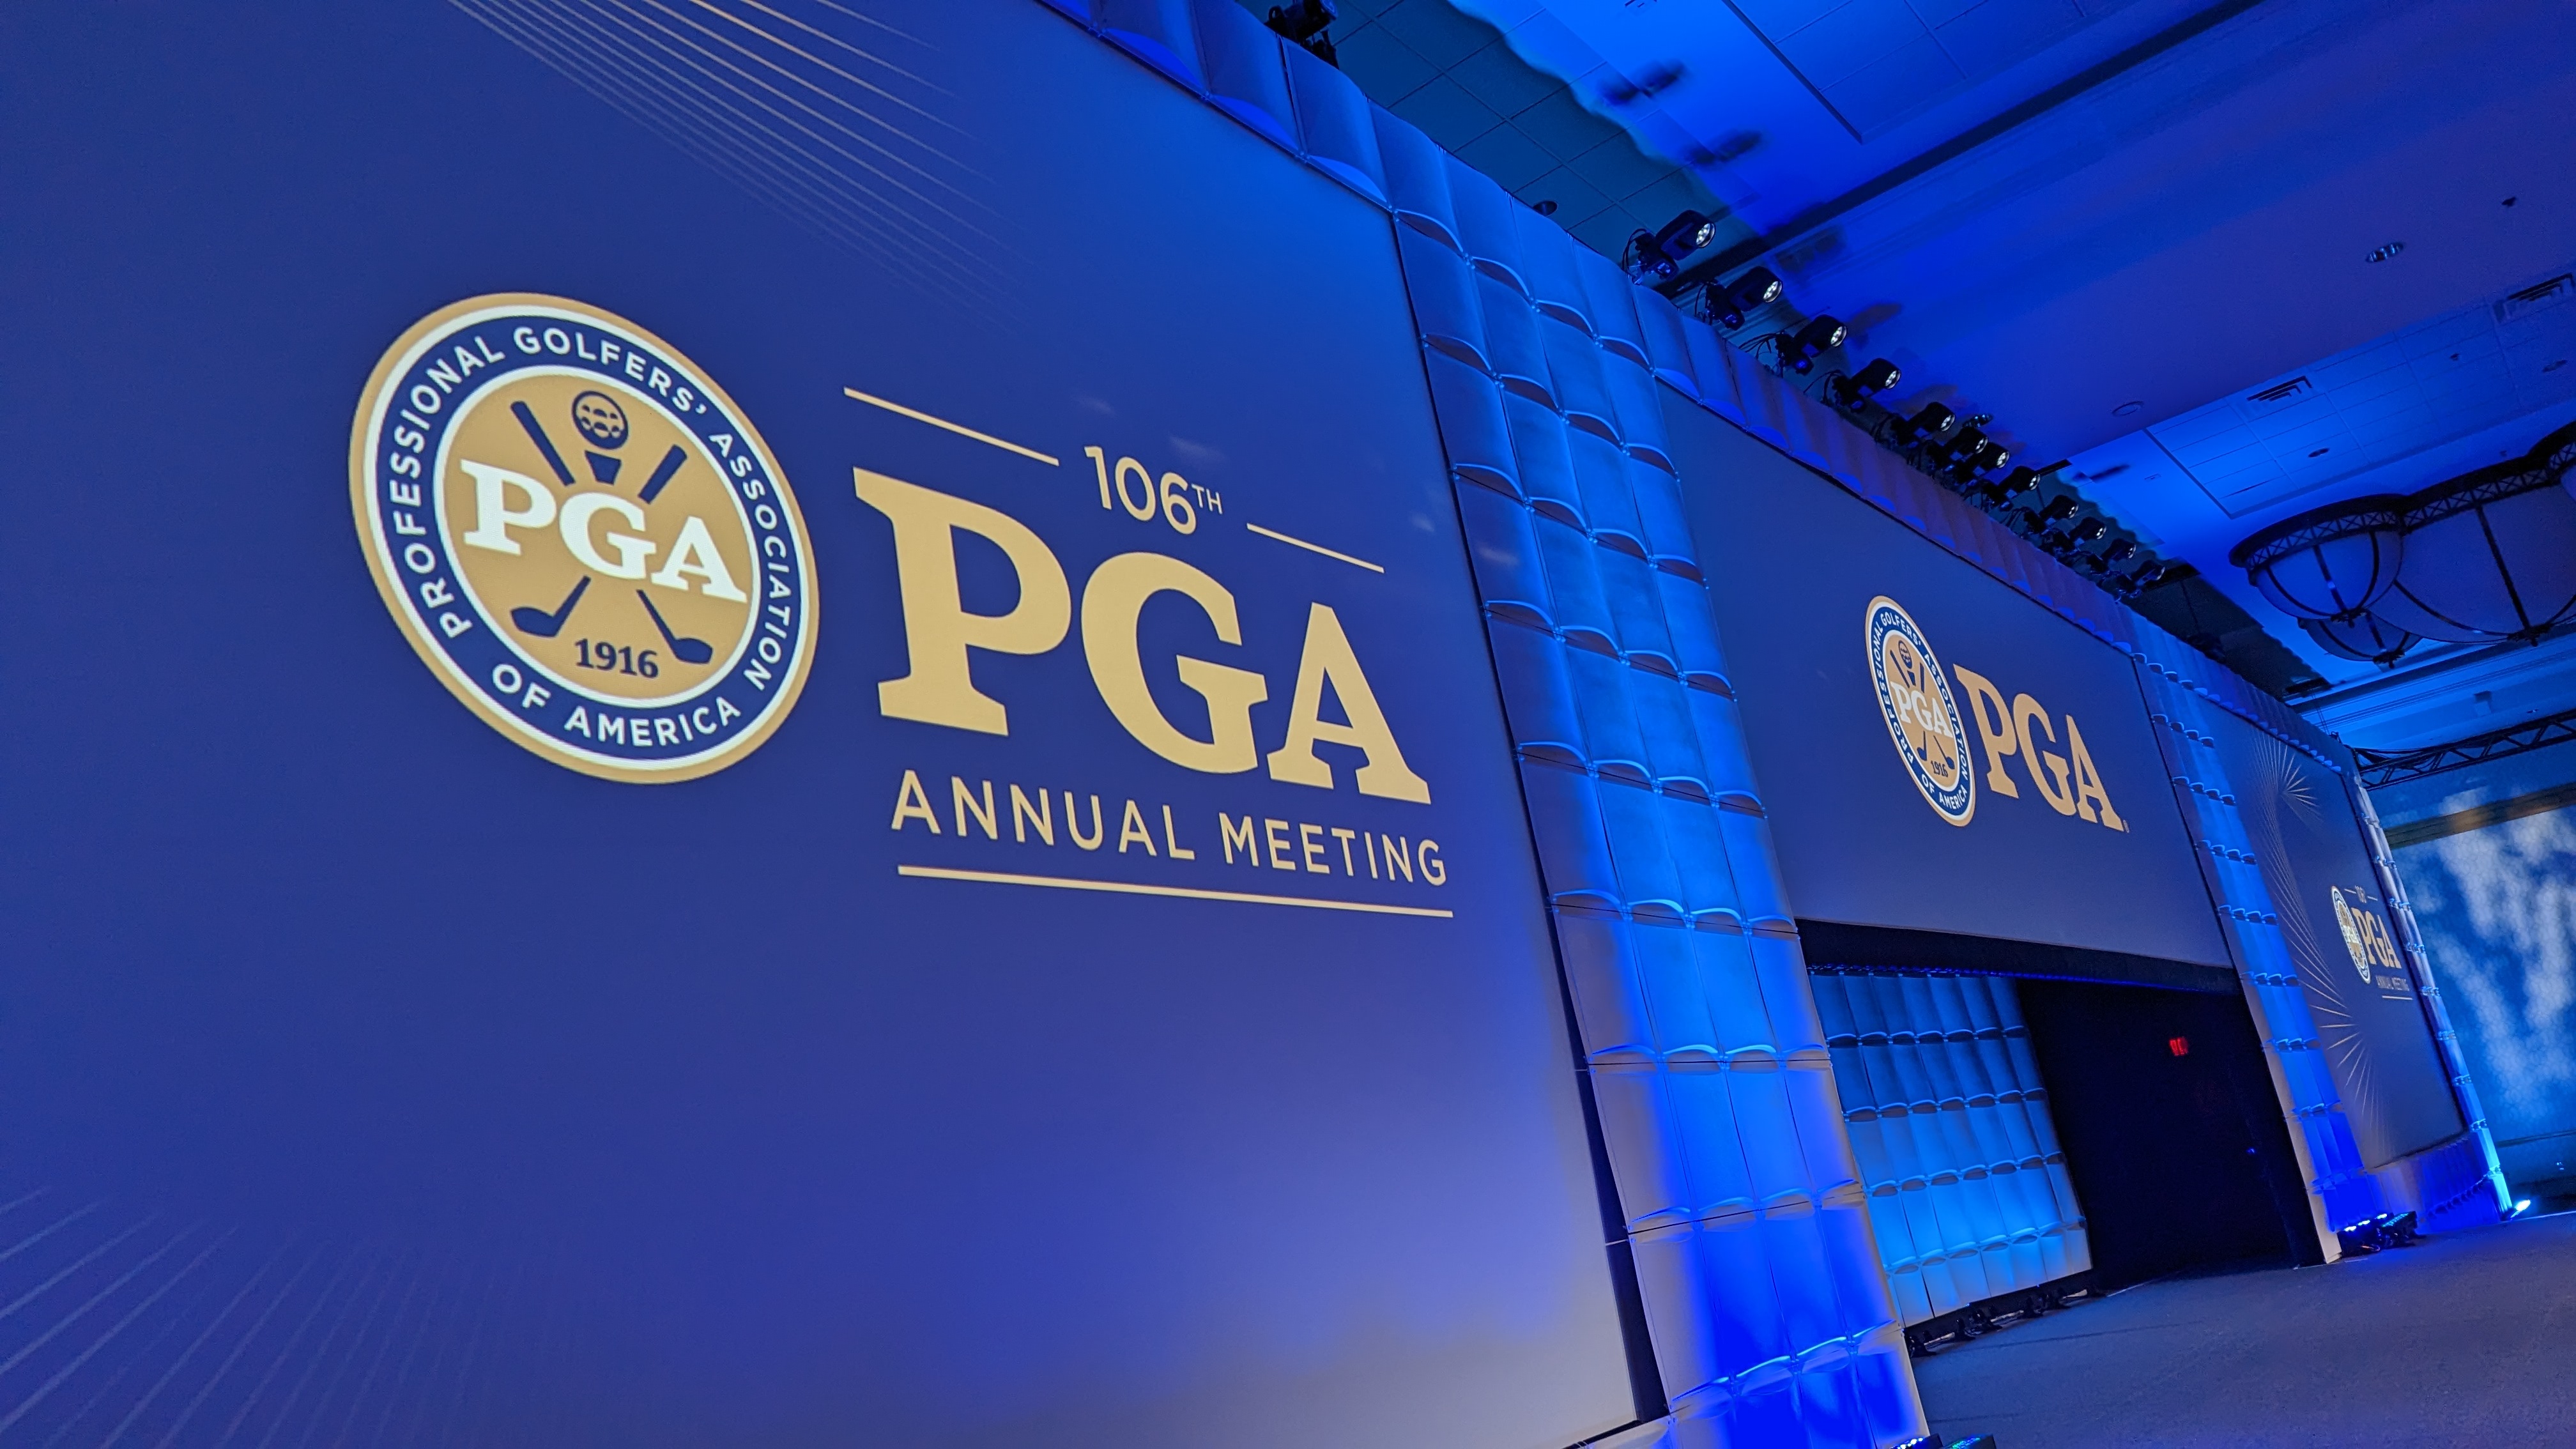 106th PGA of America Annual Meeting